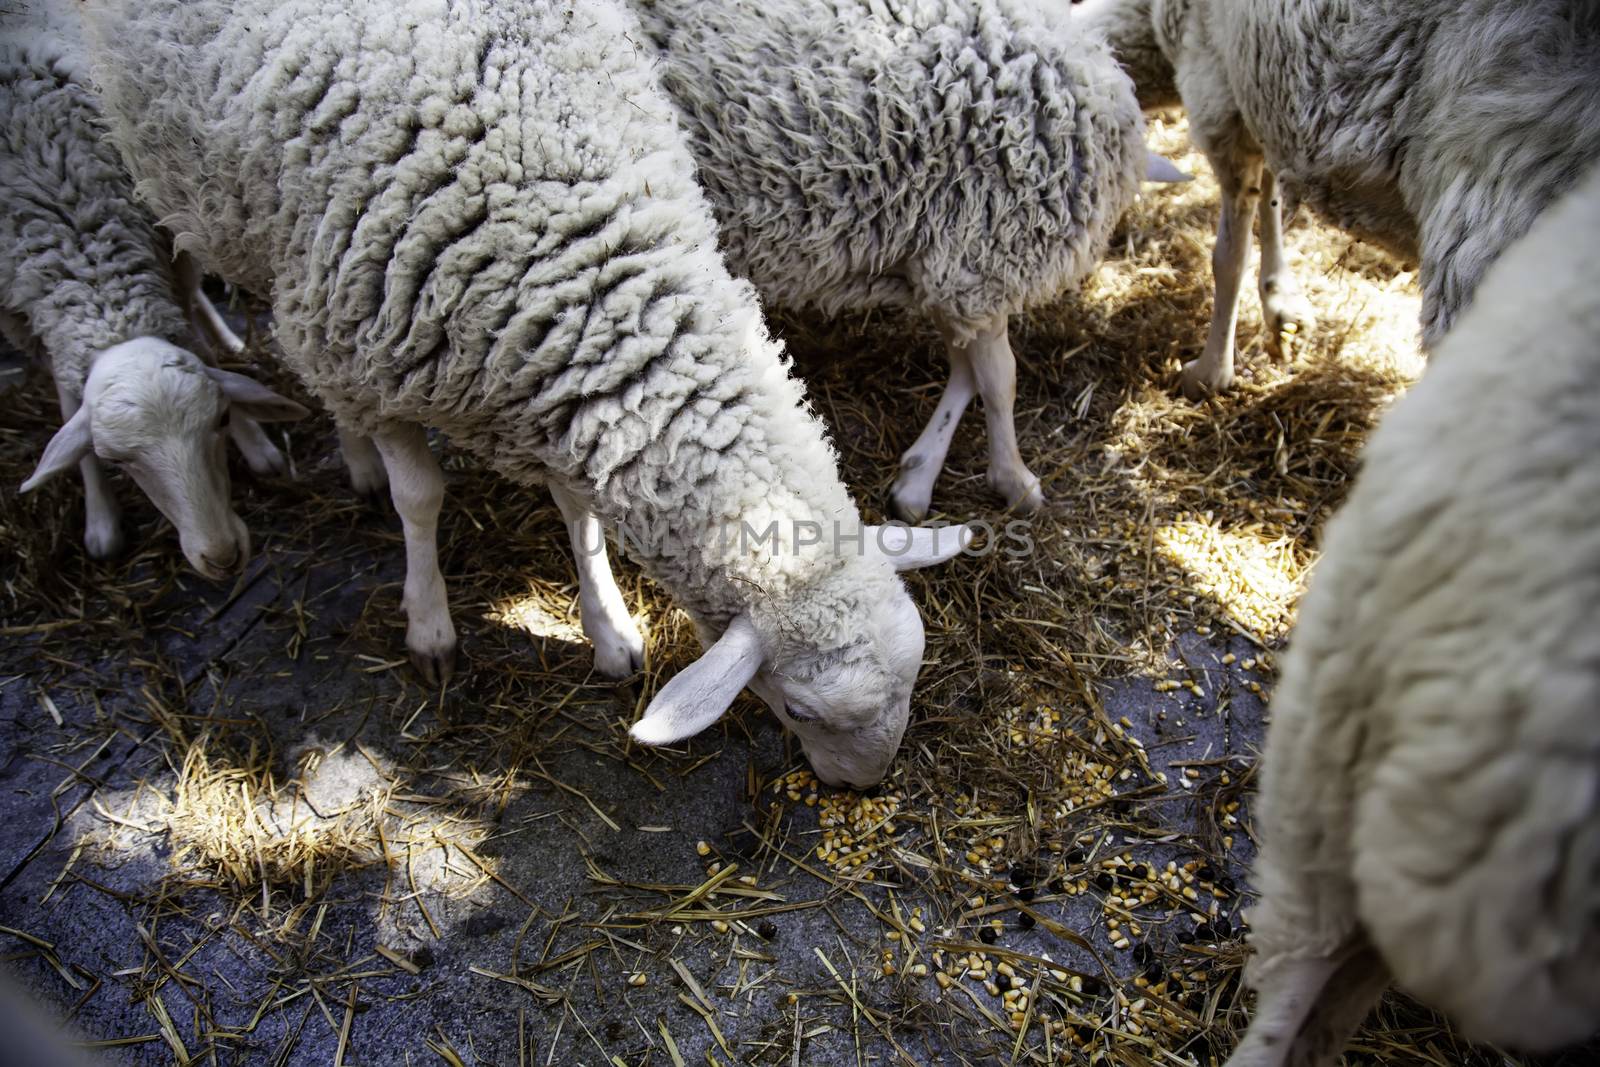 Sheep eating on a farm by esebene